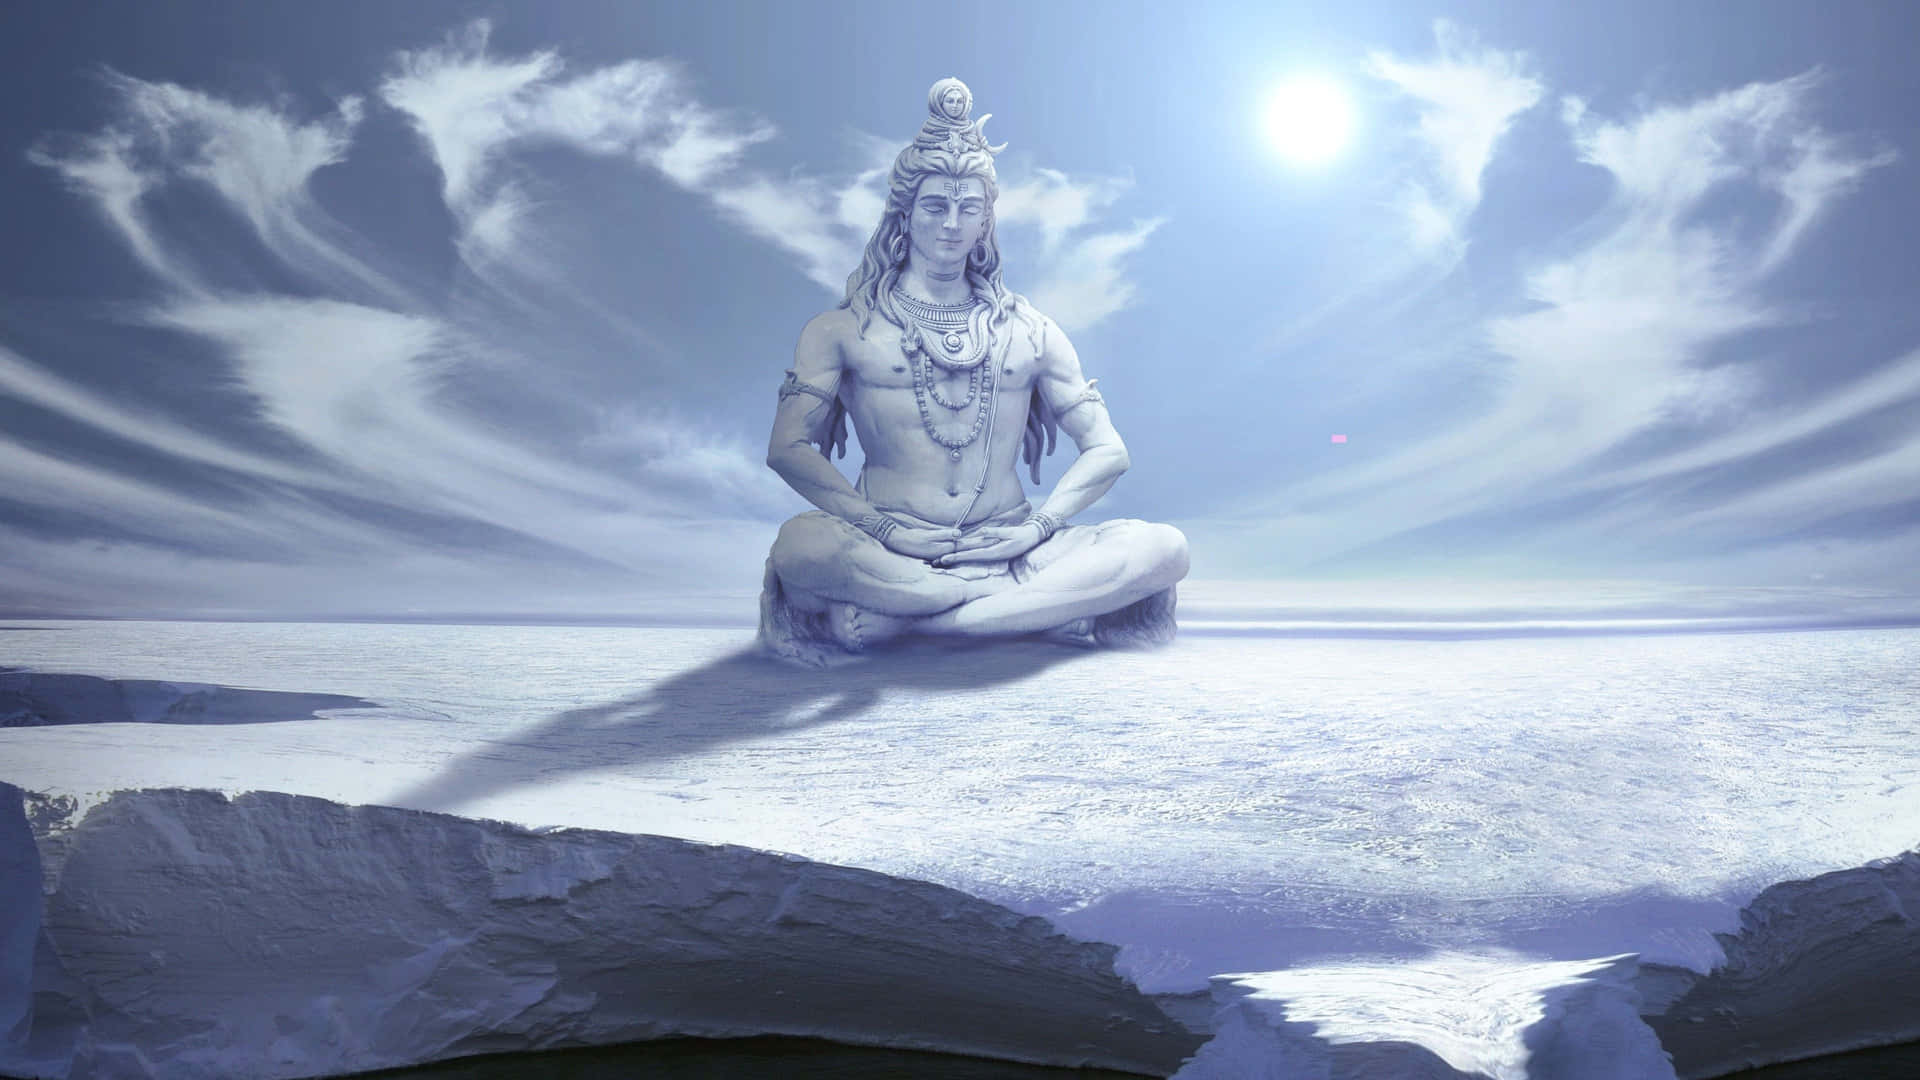 Majestic Lord Shiva In Meditation Wallpaper